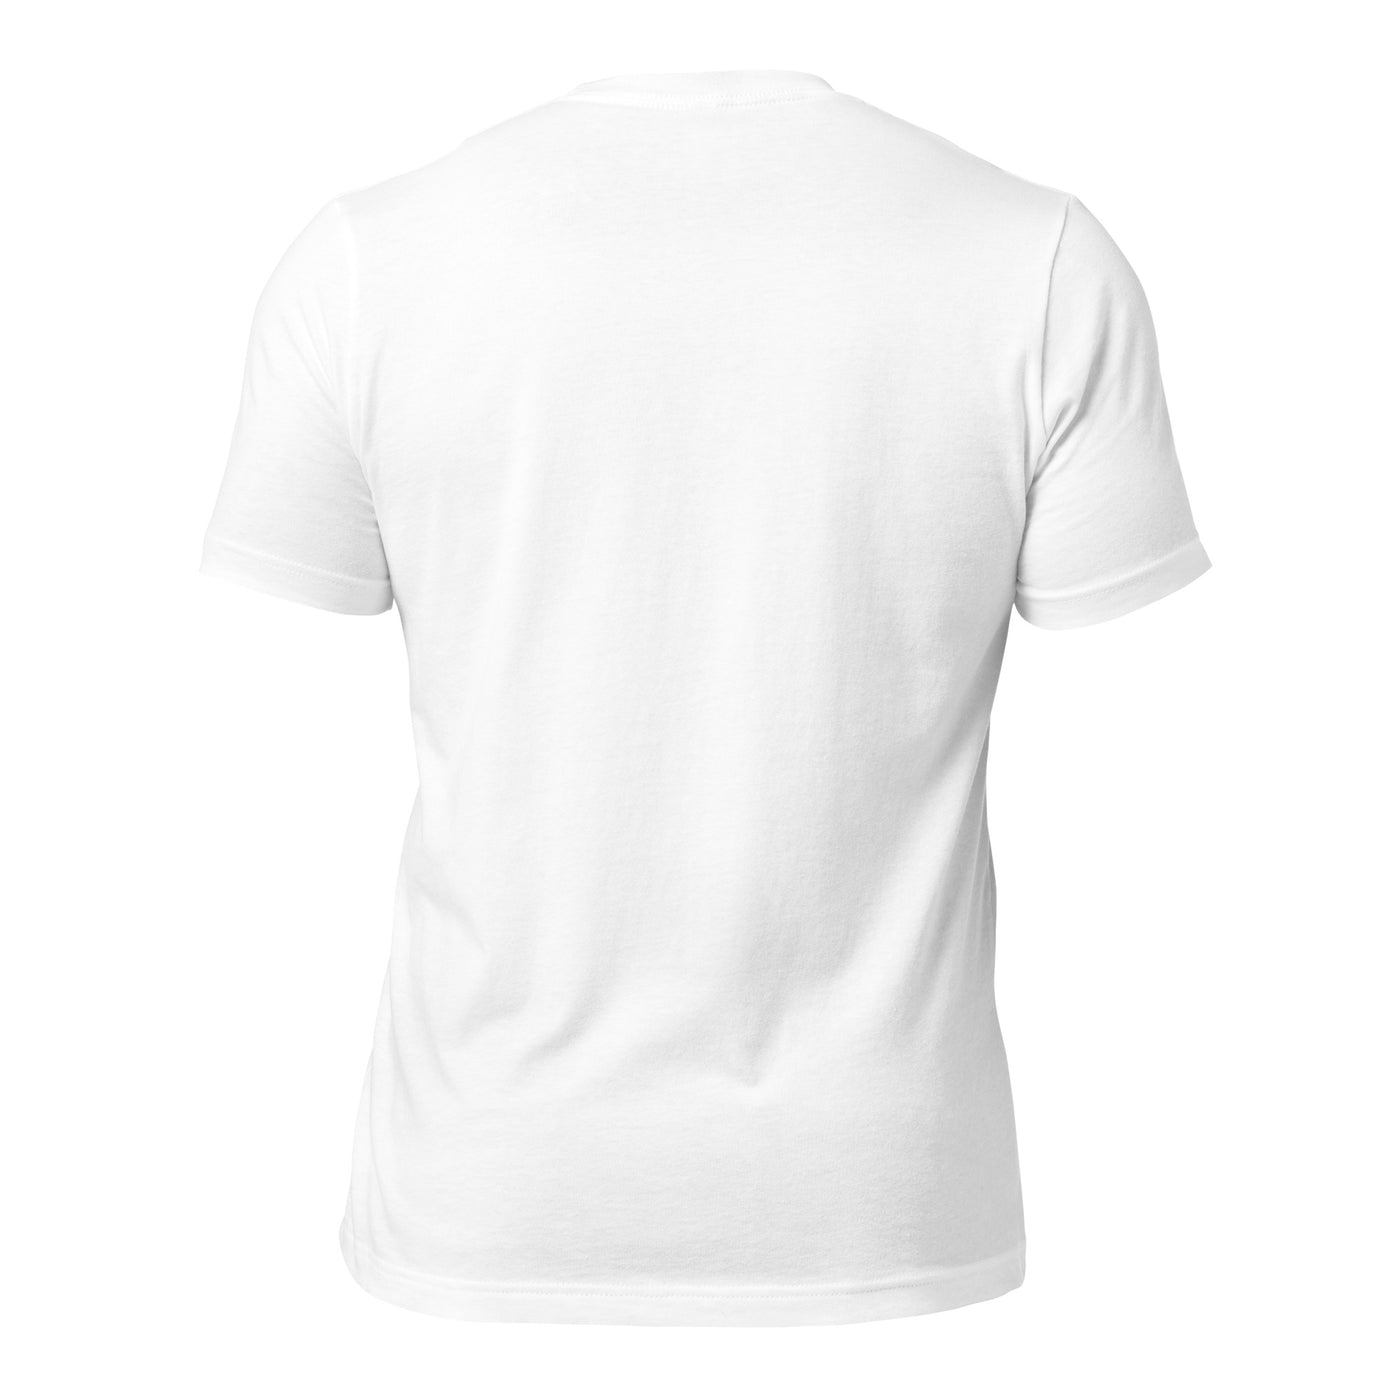 BITCOIN CLUB V5 - Unisex t-shirt